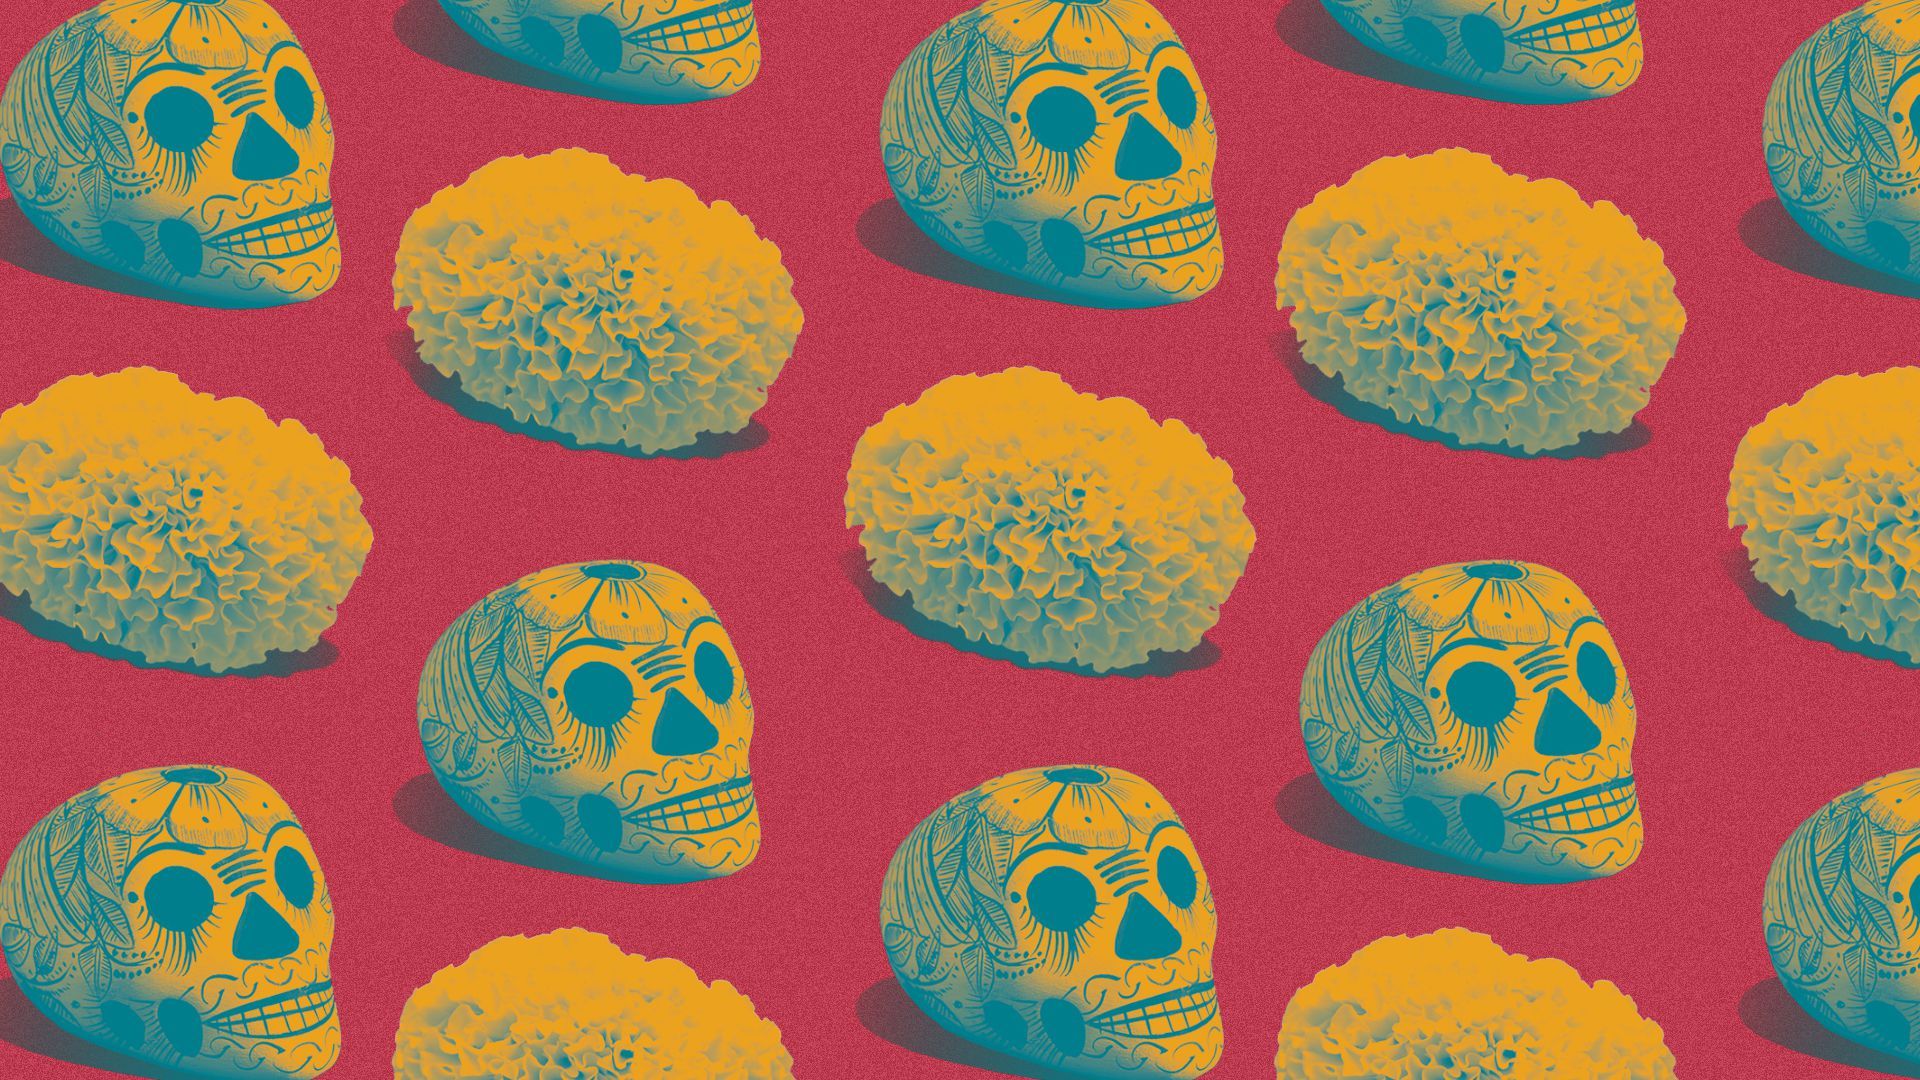 Illustration of a pattern of sugar skulls and marigolds.